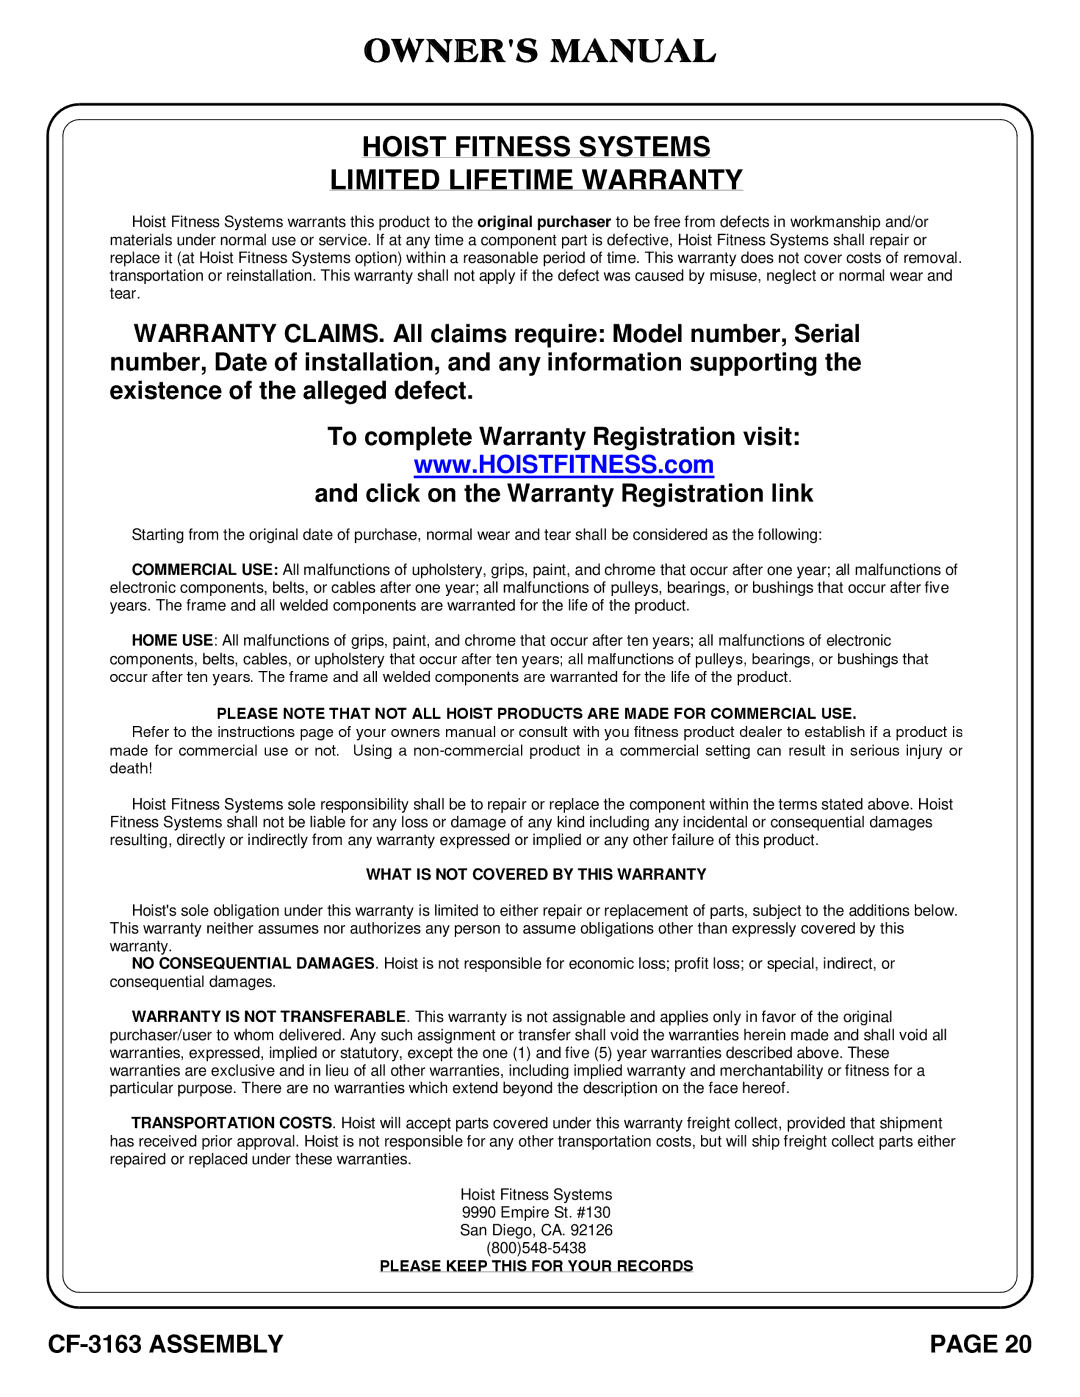 Hoist Fitness CF-3163 owner manual Hoist Fitness Systems Limited Lifetime Warranty 